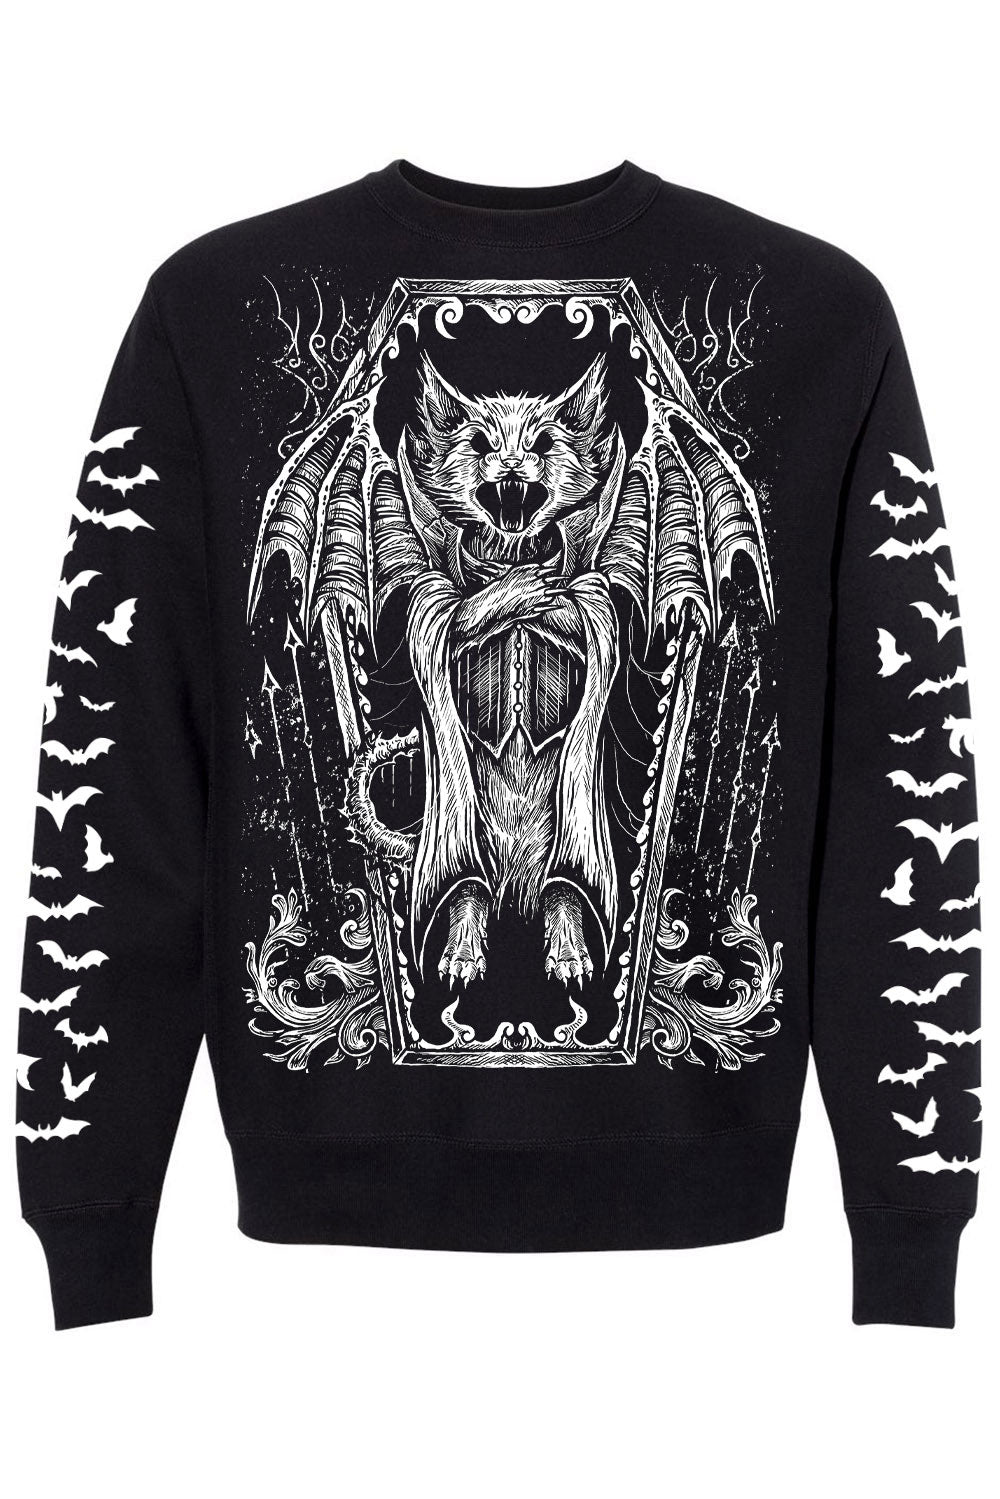 mens black gothic cat with batwings sweatshirt